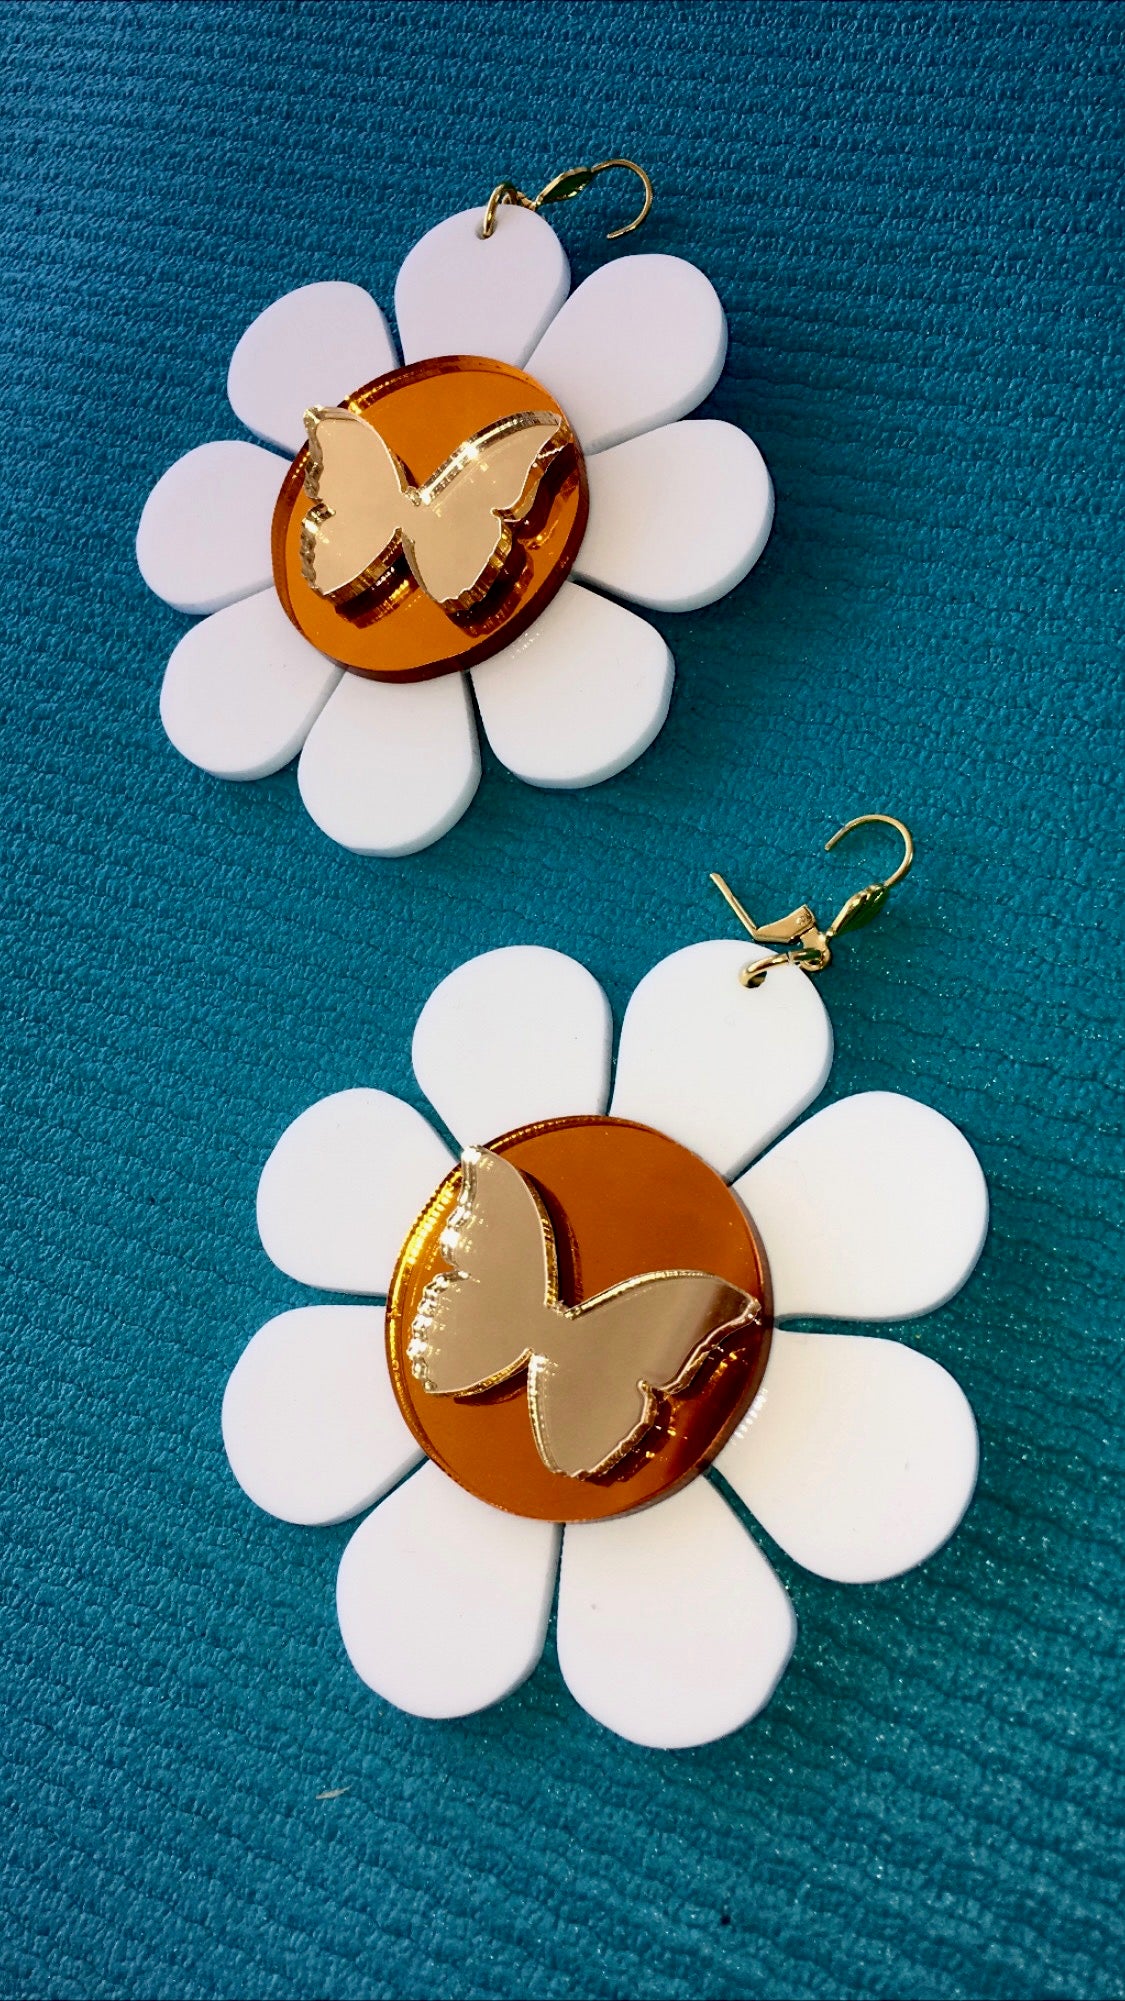 White Orange And Gold Flower Power Butterfly Earrings